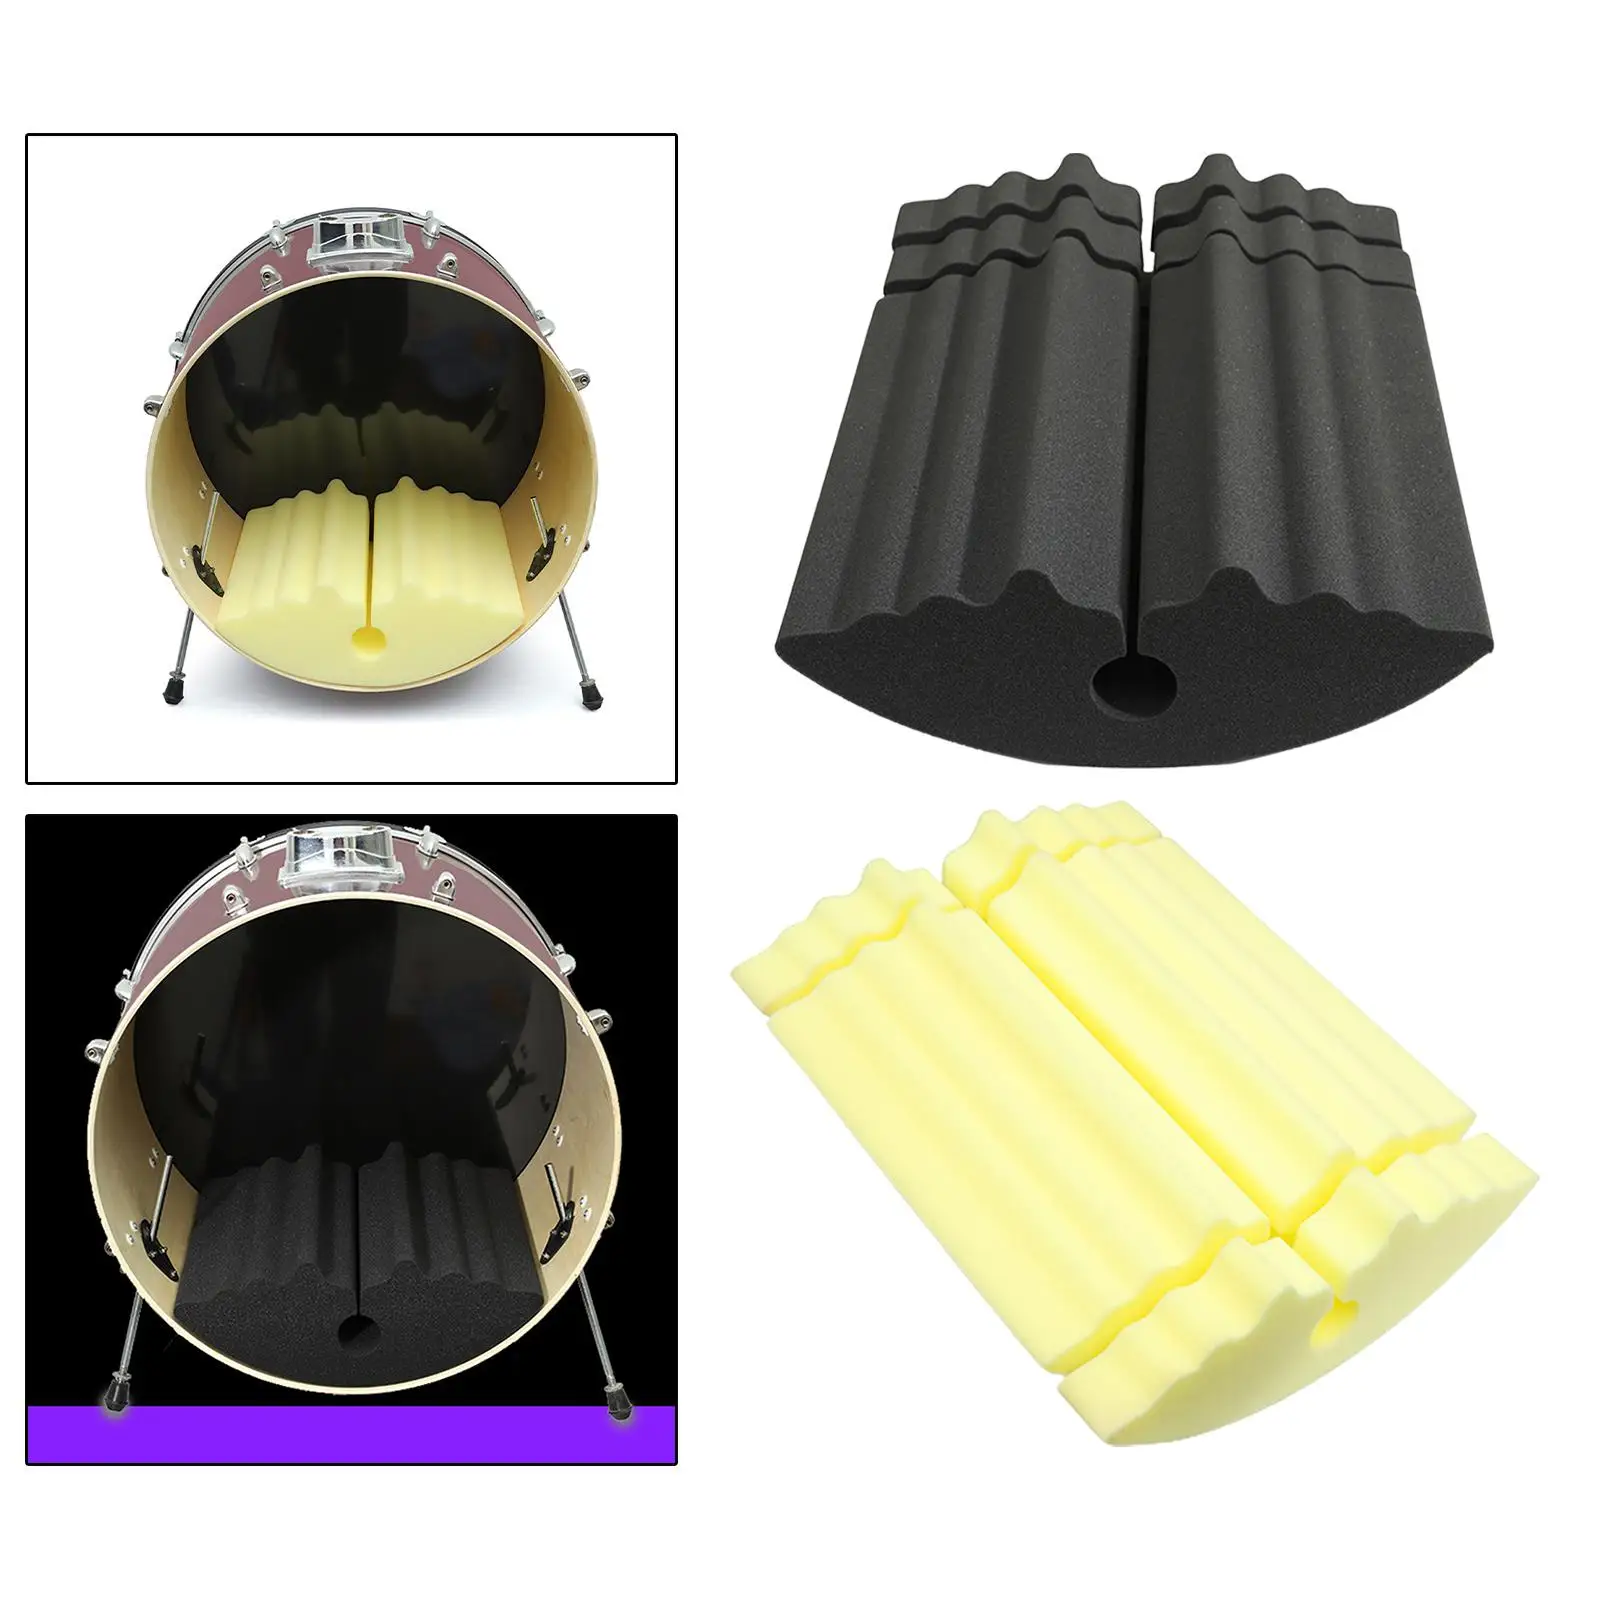 Drum Pad Practicing Pad Sound Proofing Reusable Tone Control Sound Insulation Cushion Drum Drum practice pads